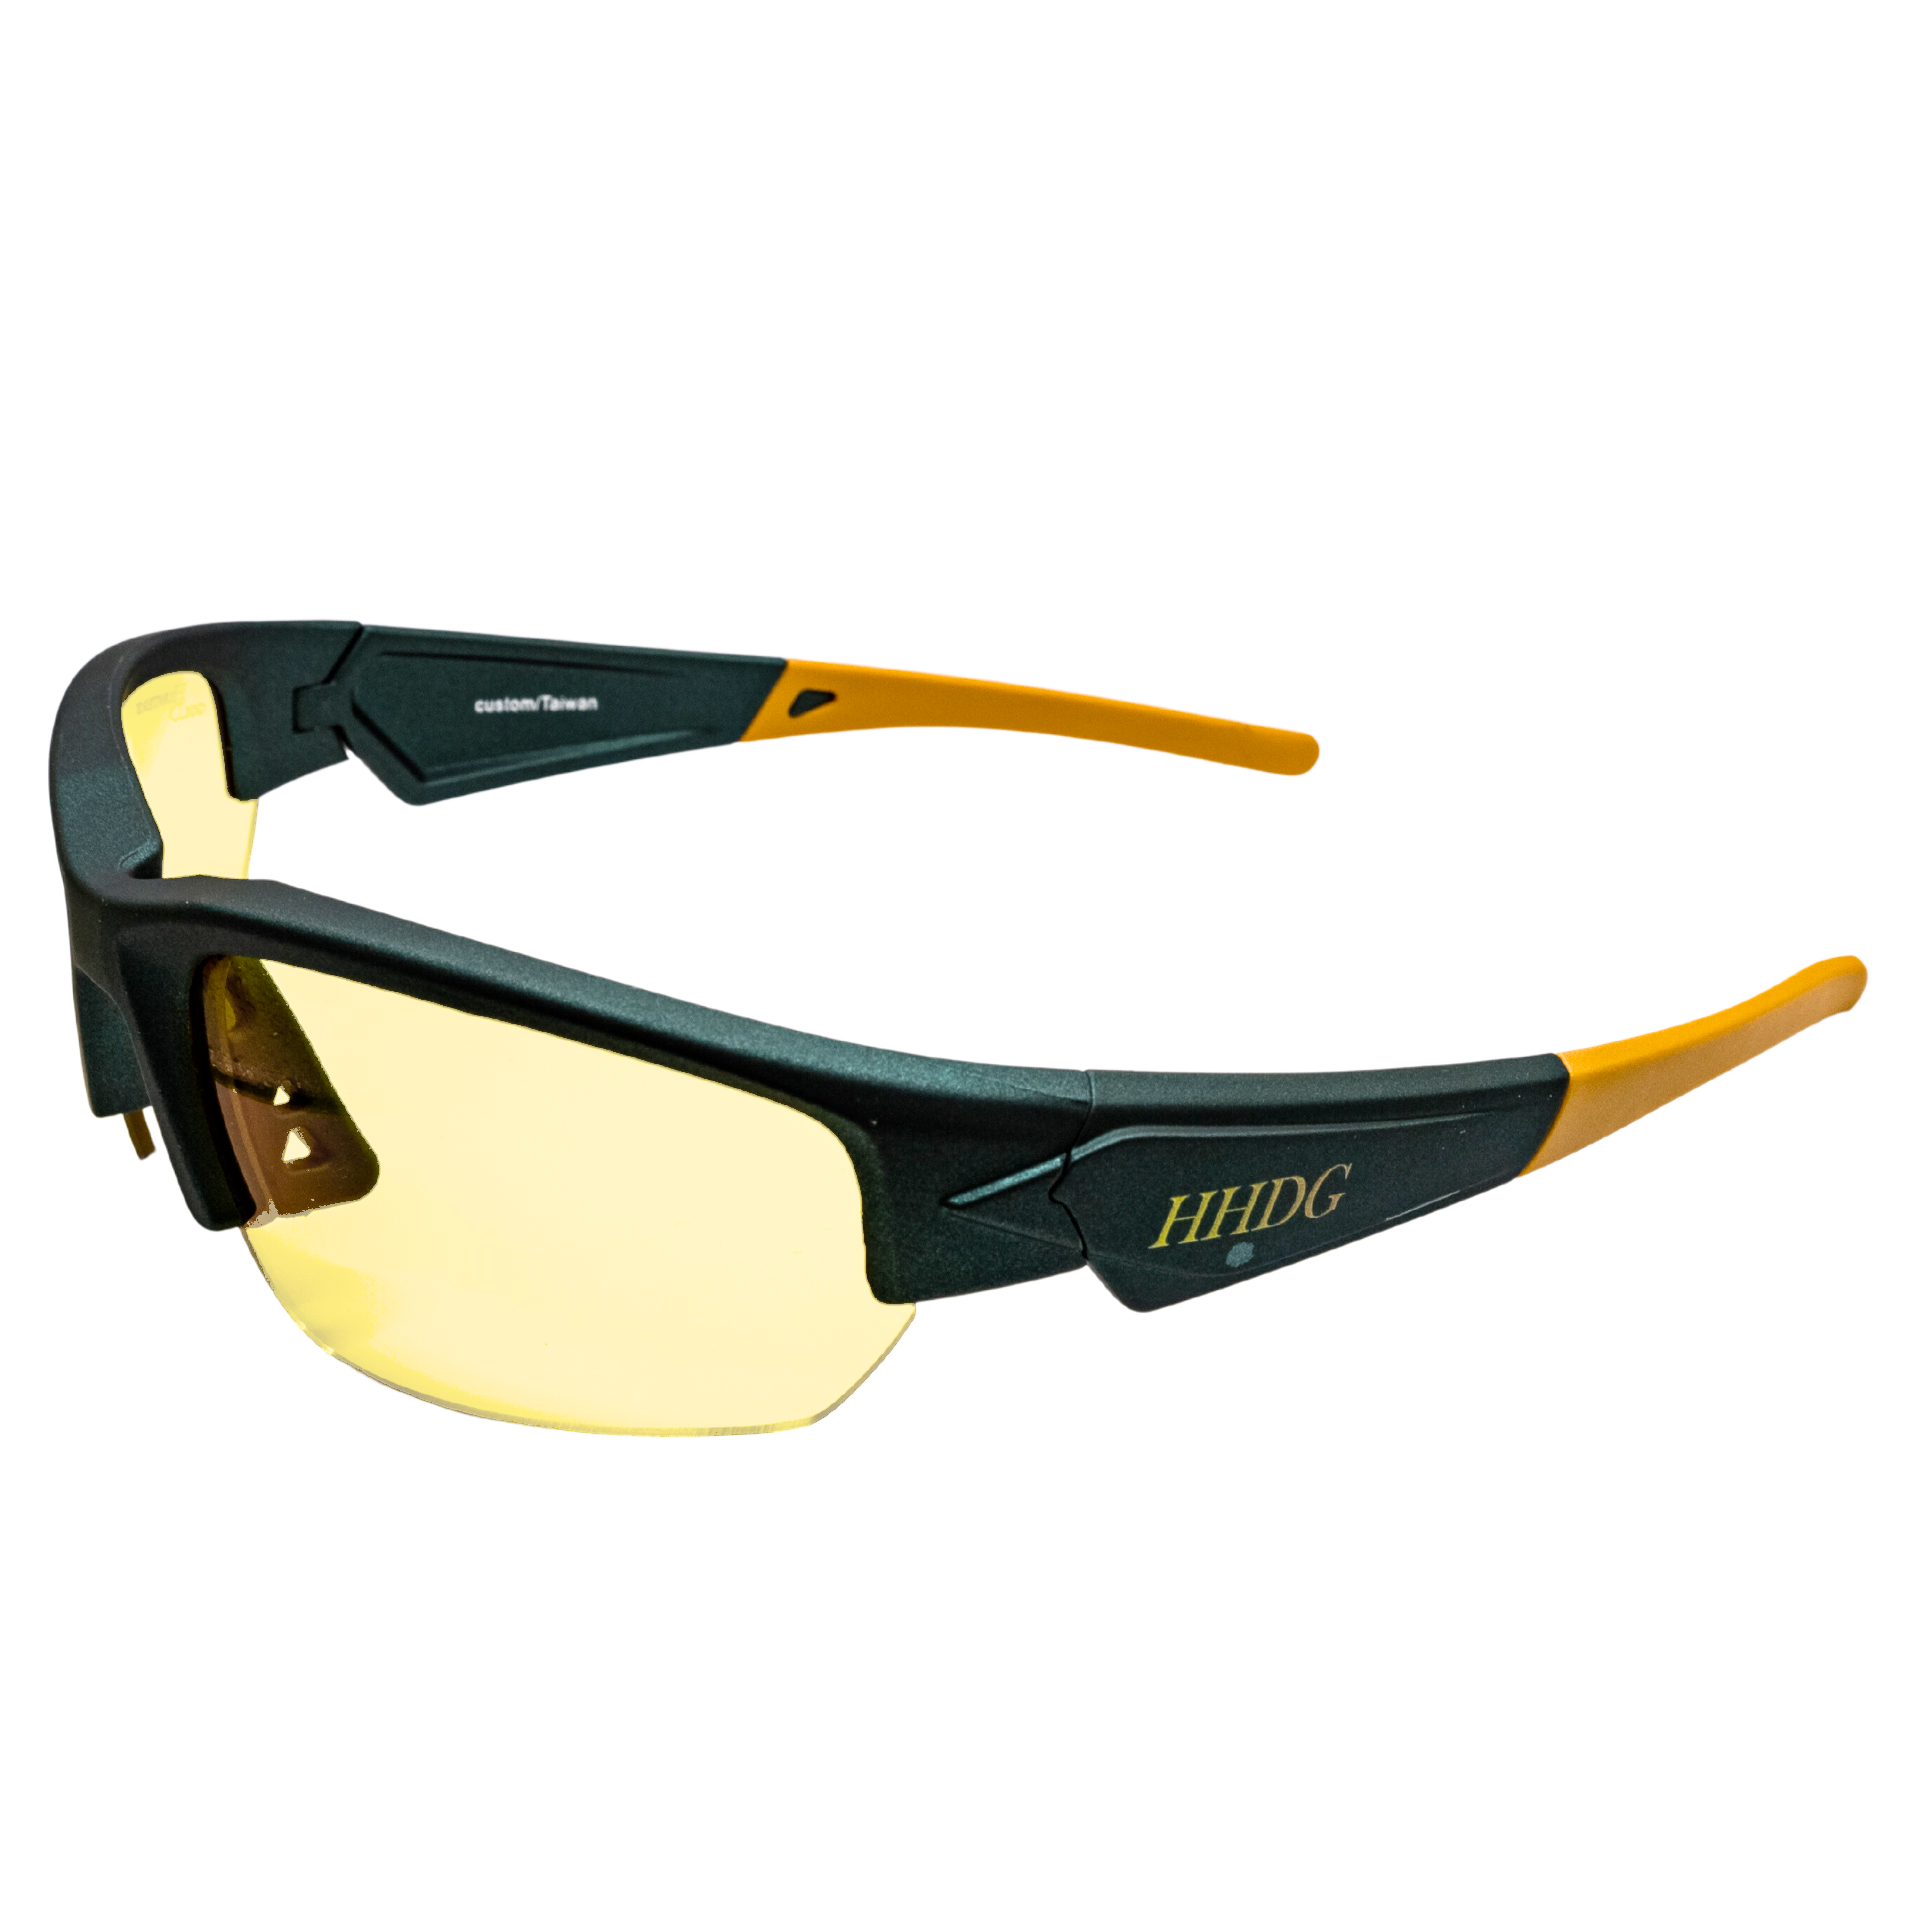 Buy Magic Vision 5 in 1 Quick Change Magnet Lenses Frame Sunglasses